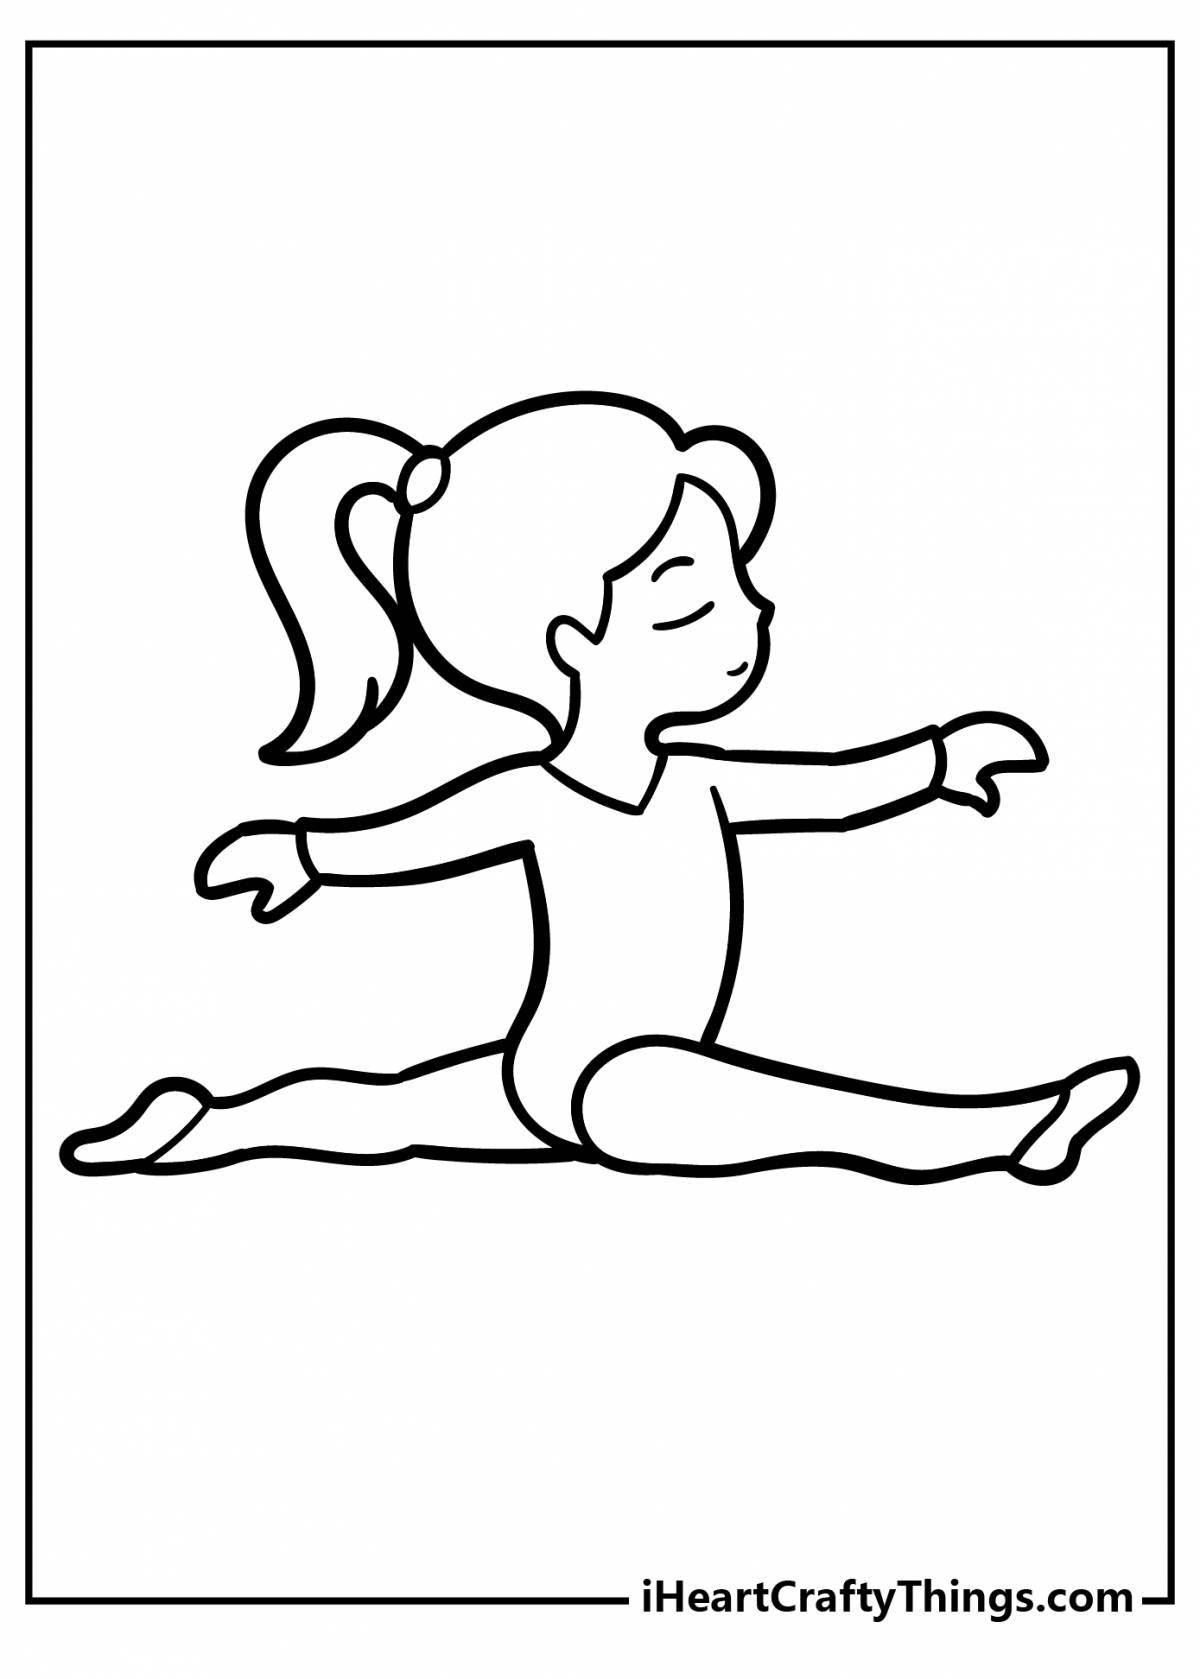 Fun gymnastics coloring book for kids